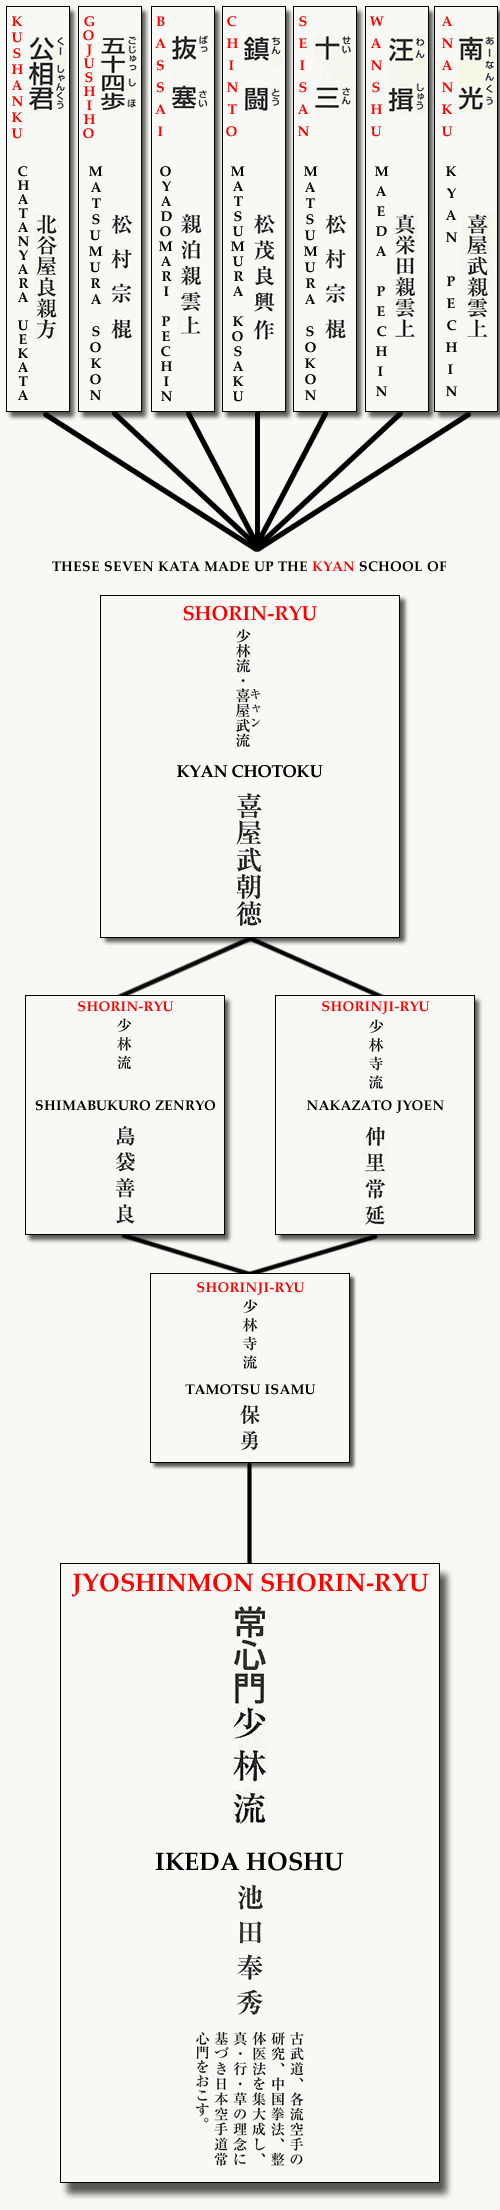 Visual representation of Jyoshinmon Seiden Kata